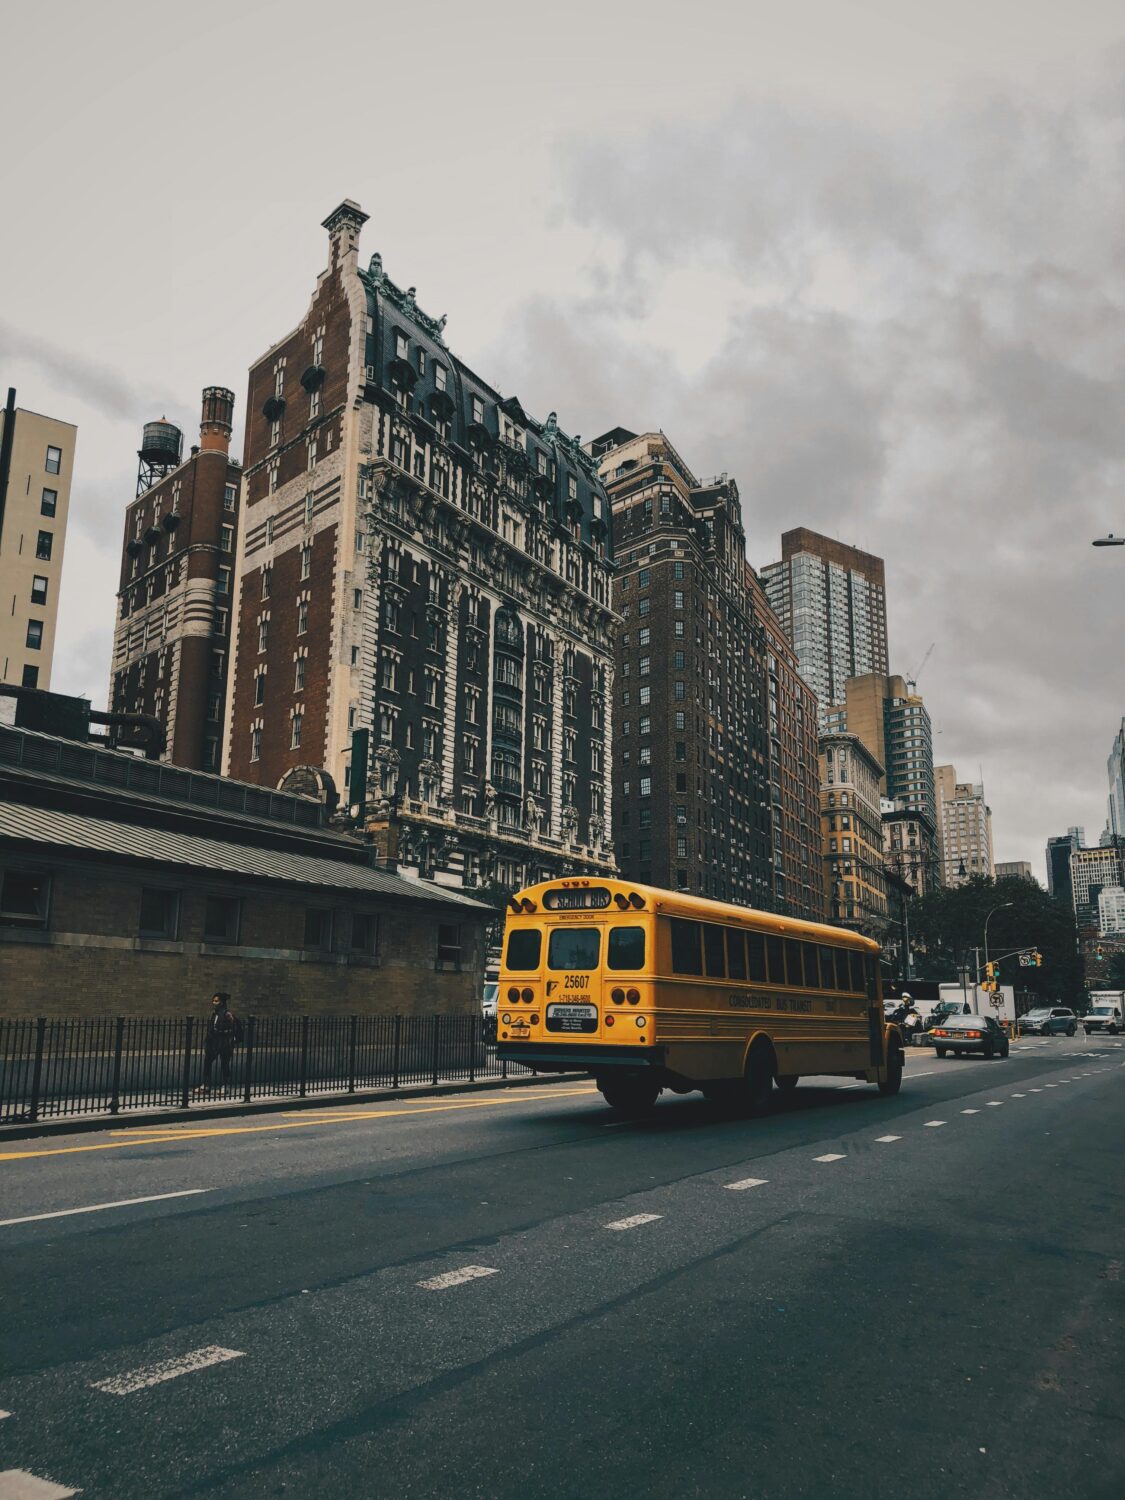 School bus drives down NYC street. (Photo by Guilherme Rossi via Pexels)